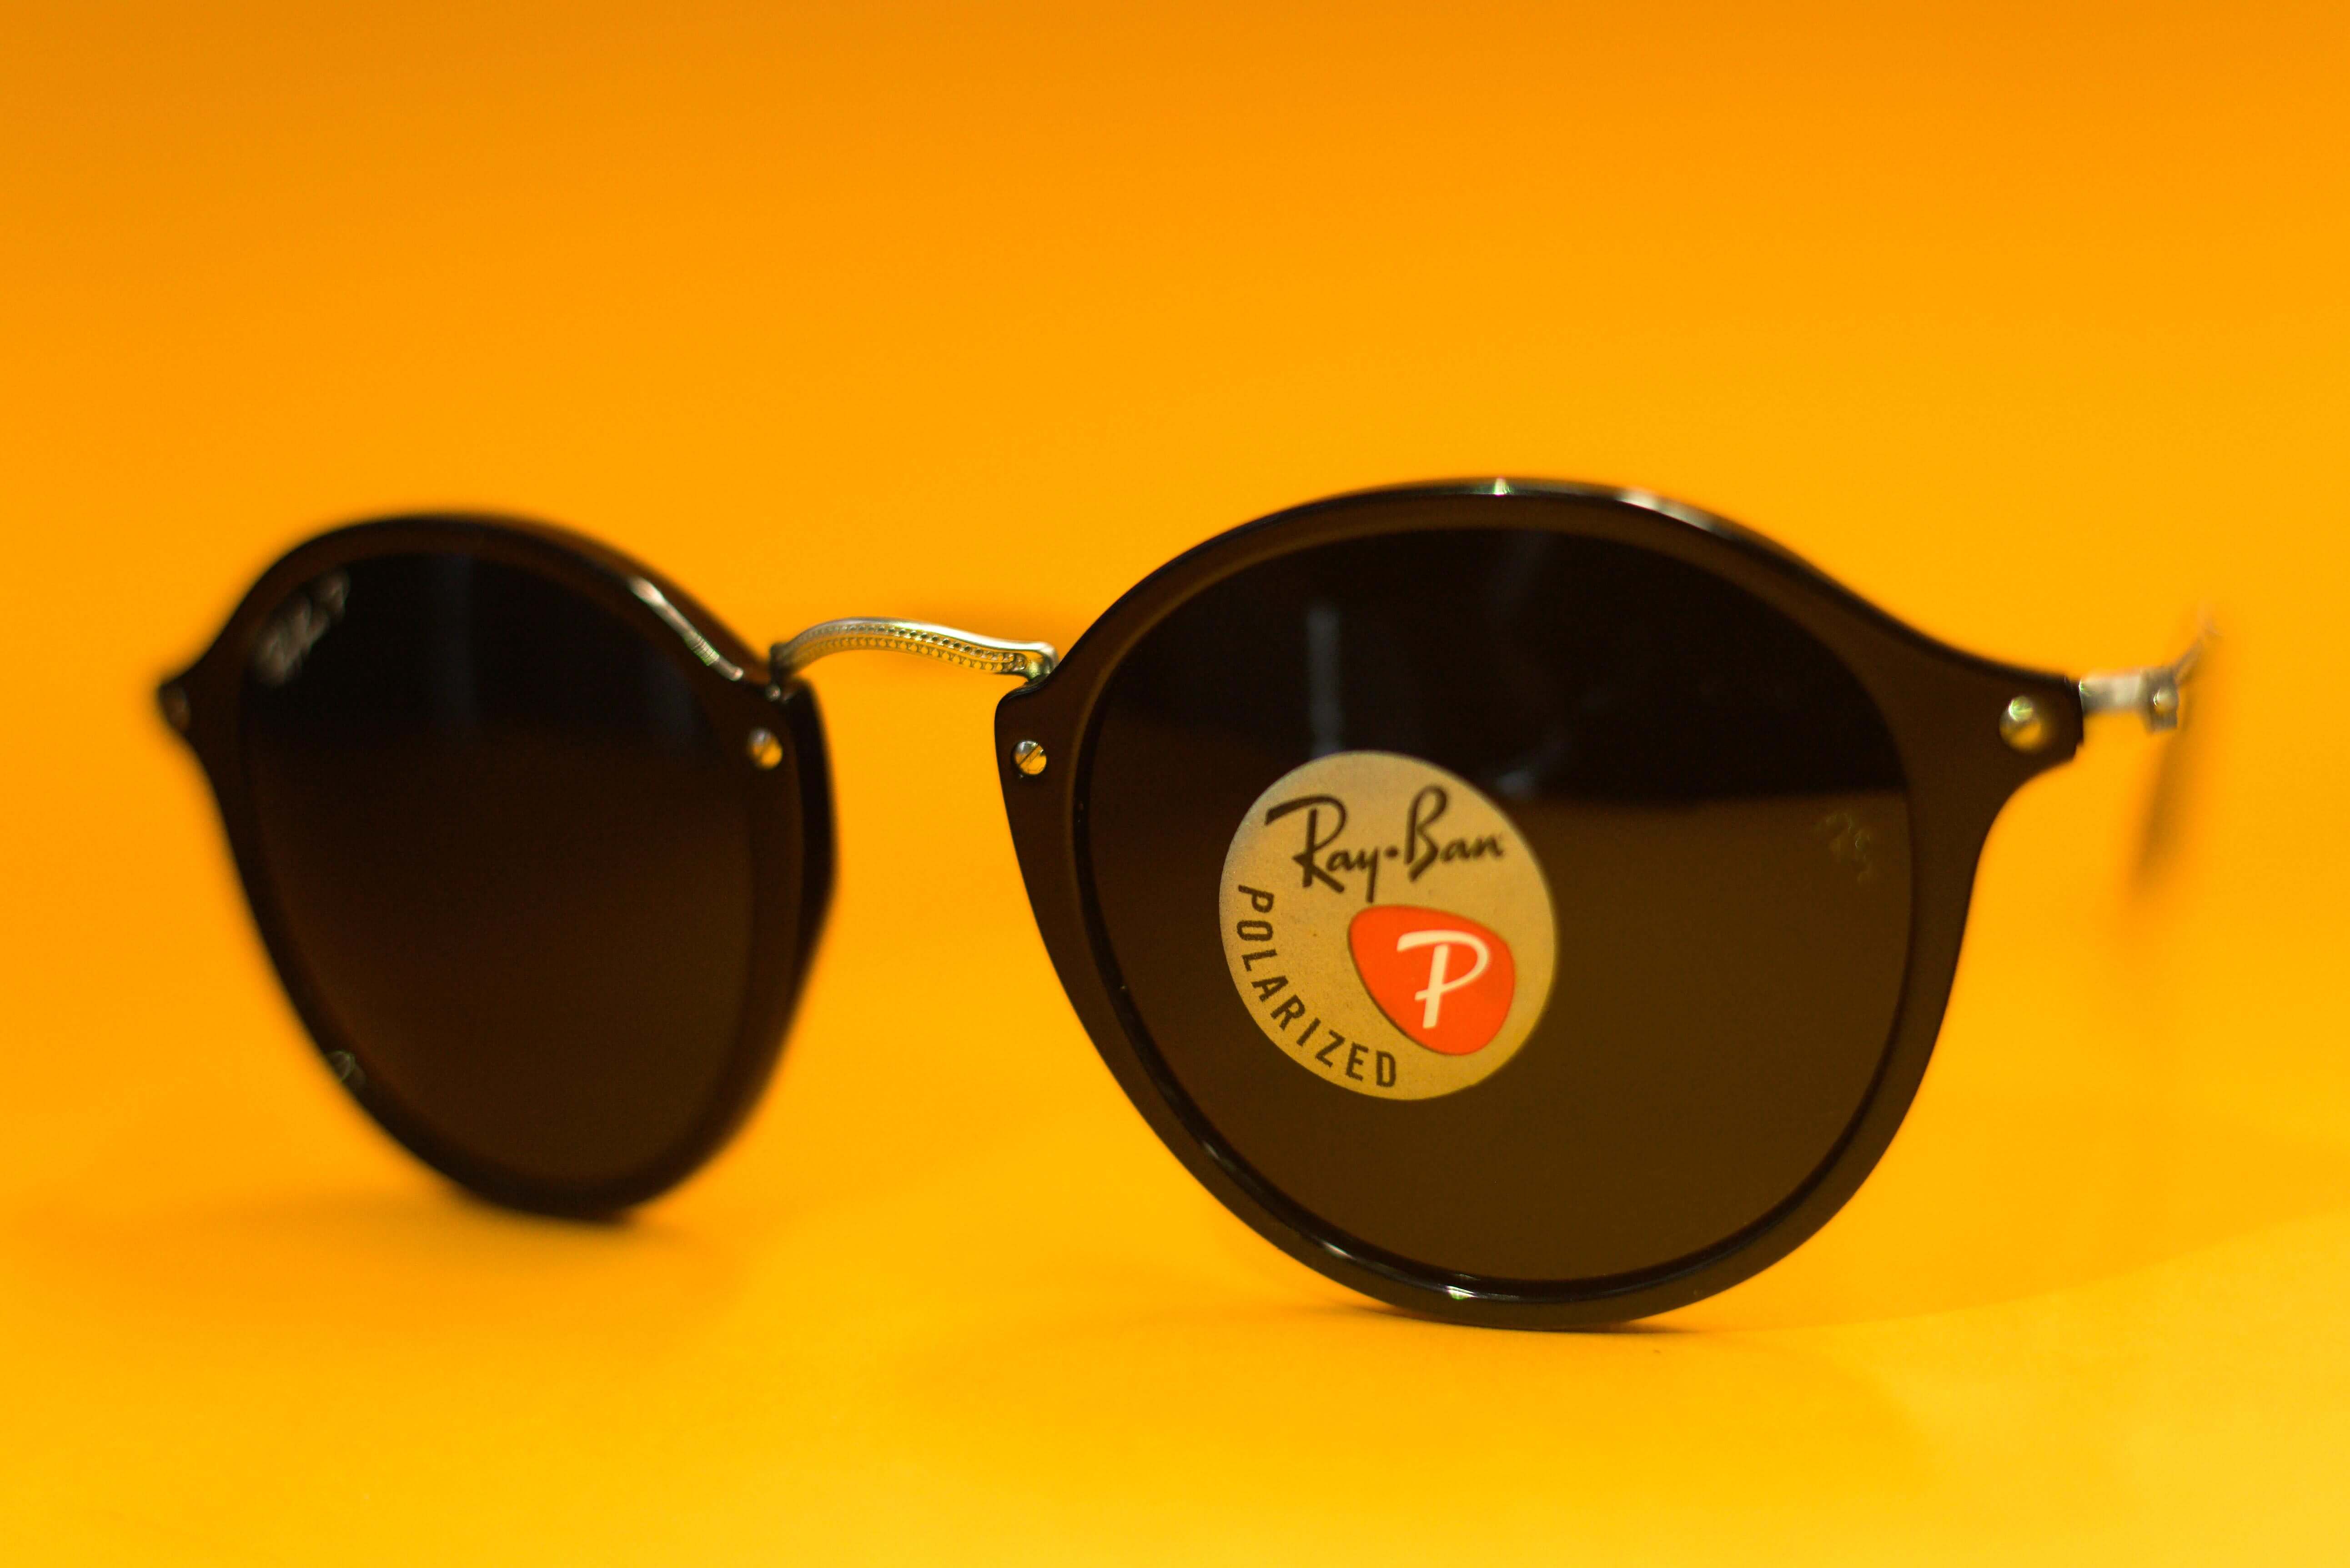 2019 cheap ray ban preScriPTion sunglasses uk discount